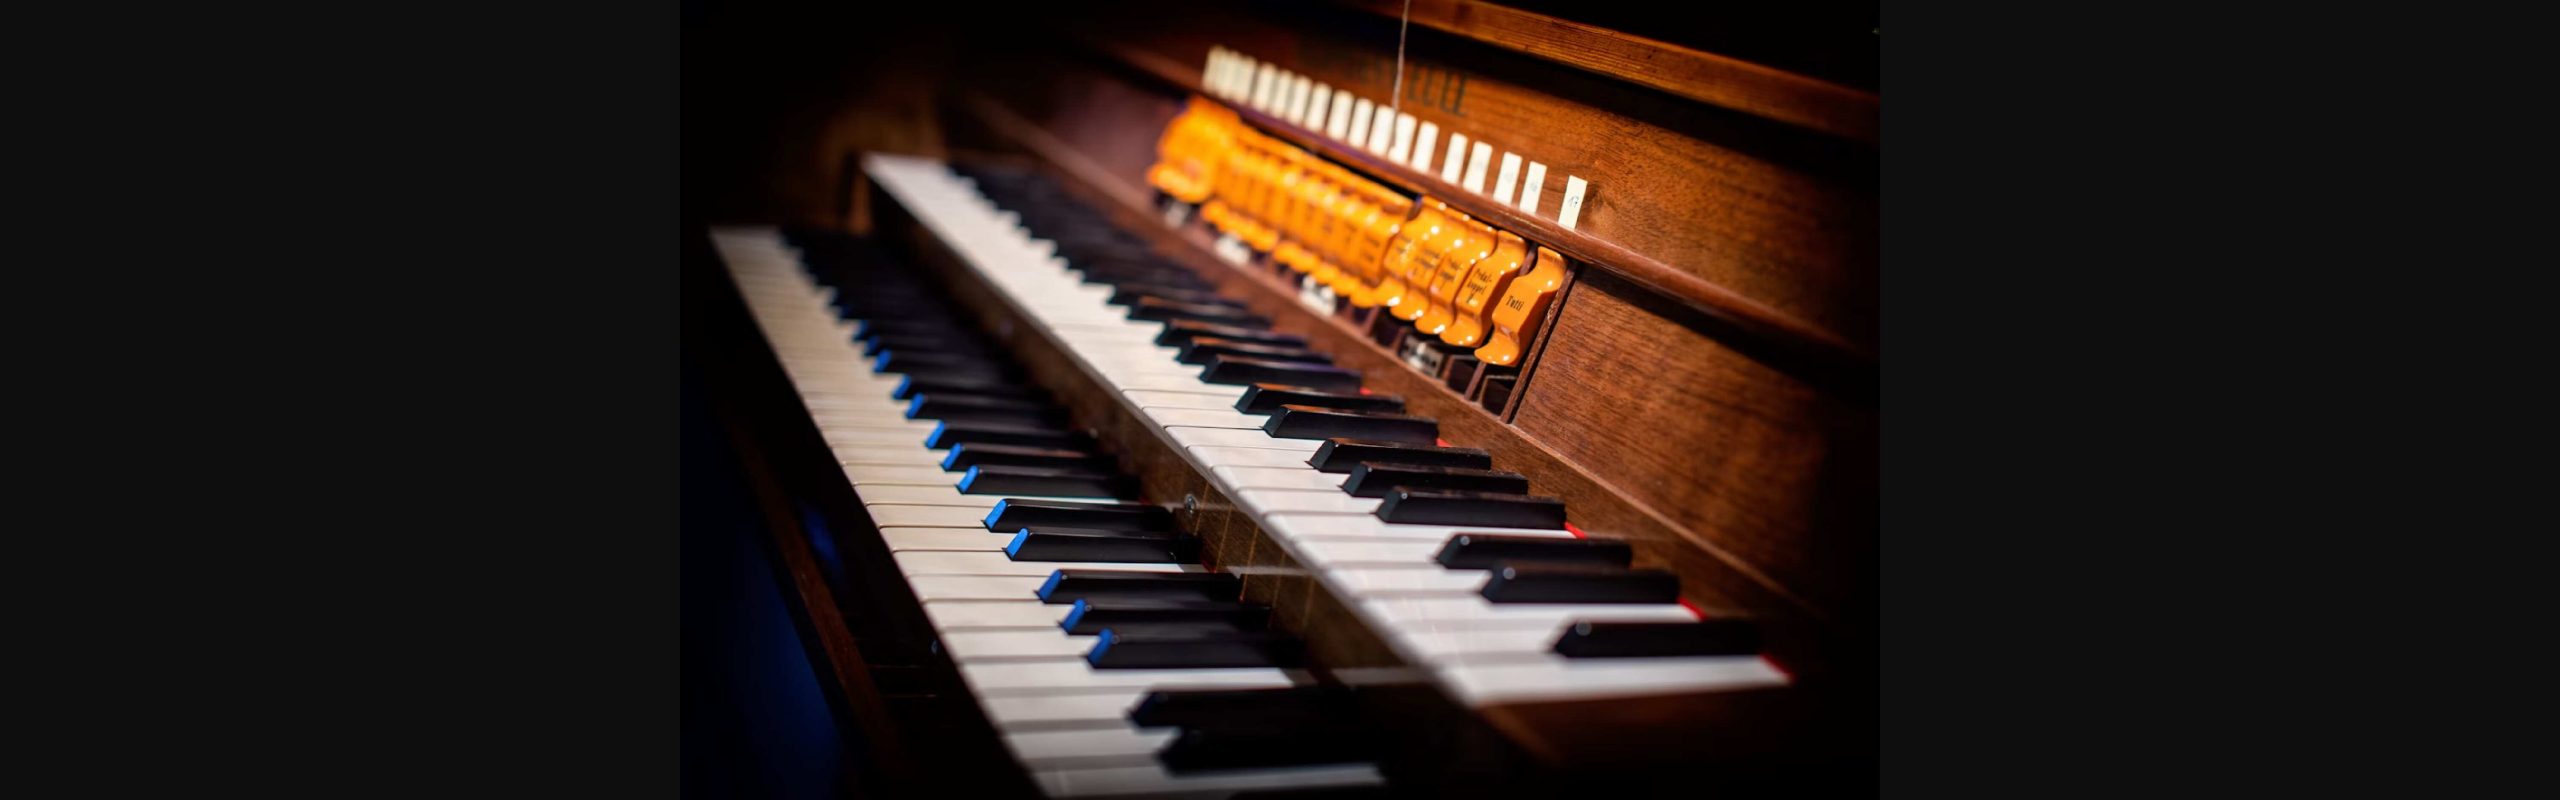 organ vs piano